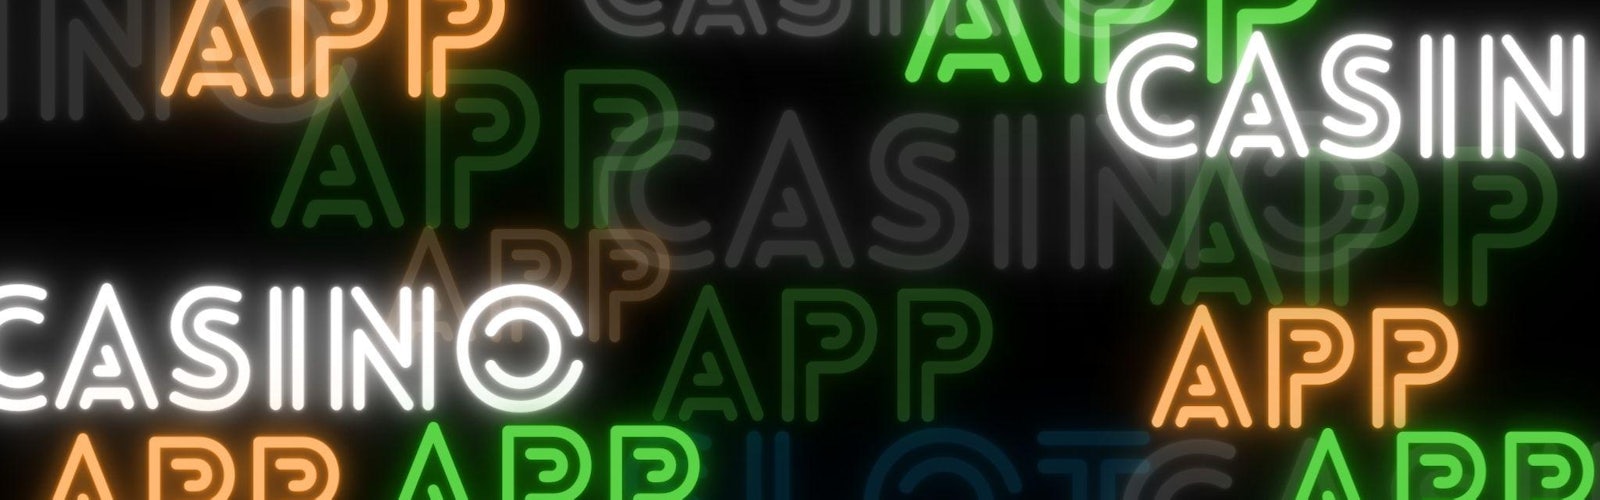 Online casino app page main